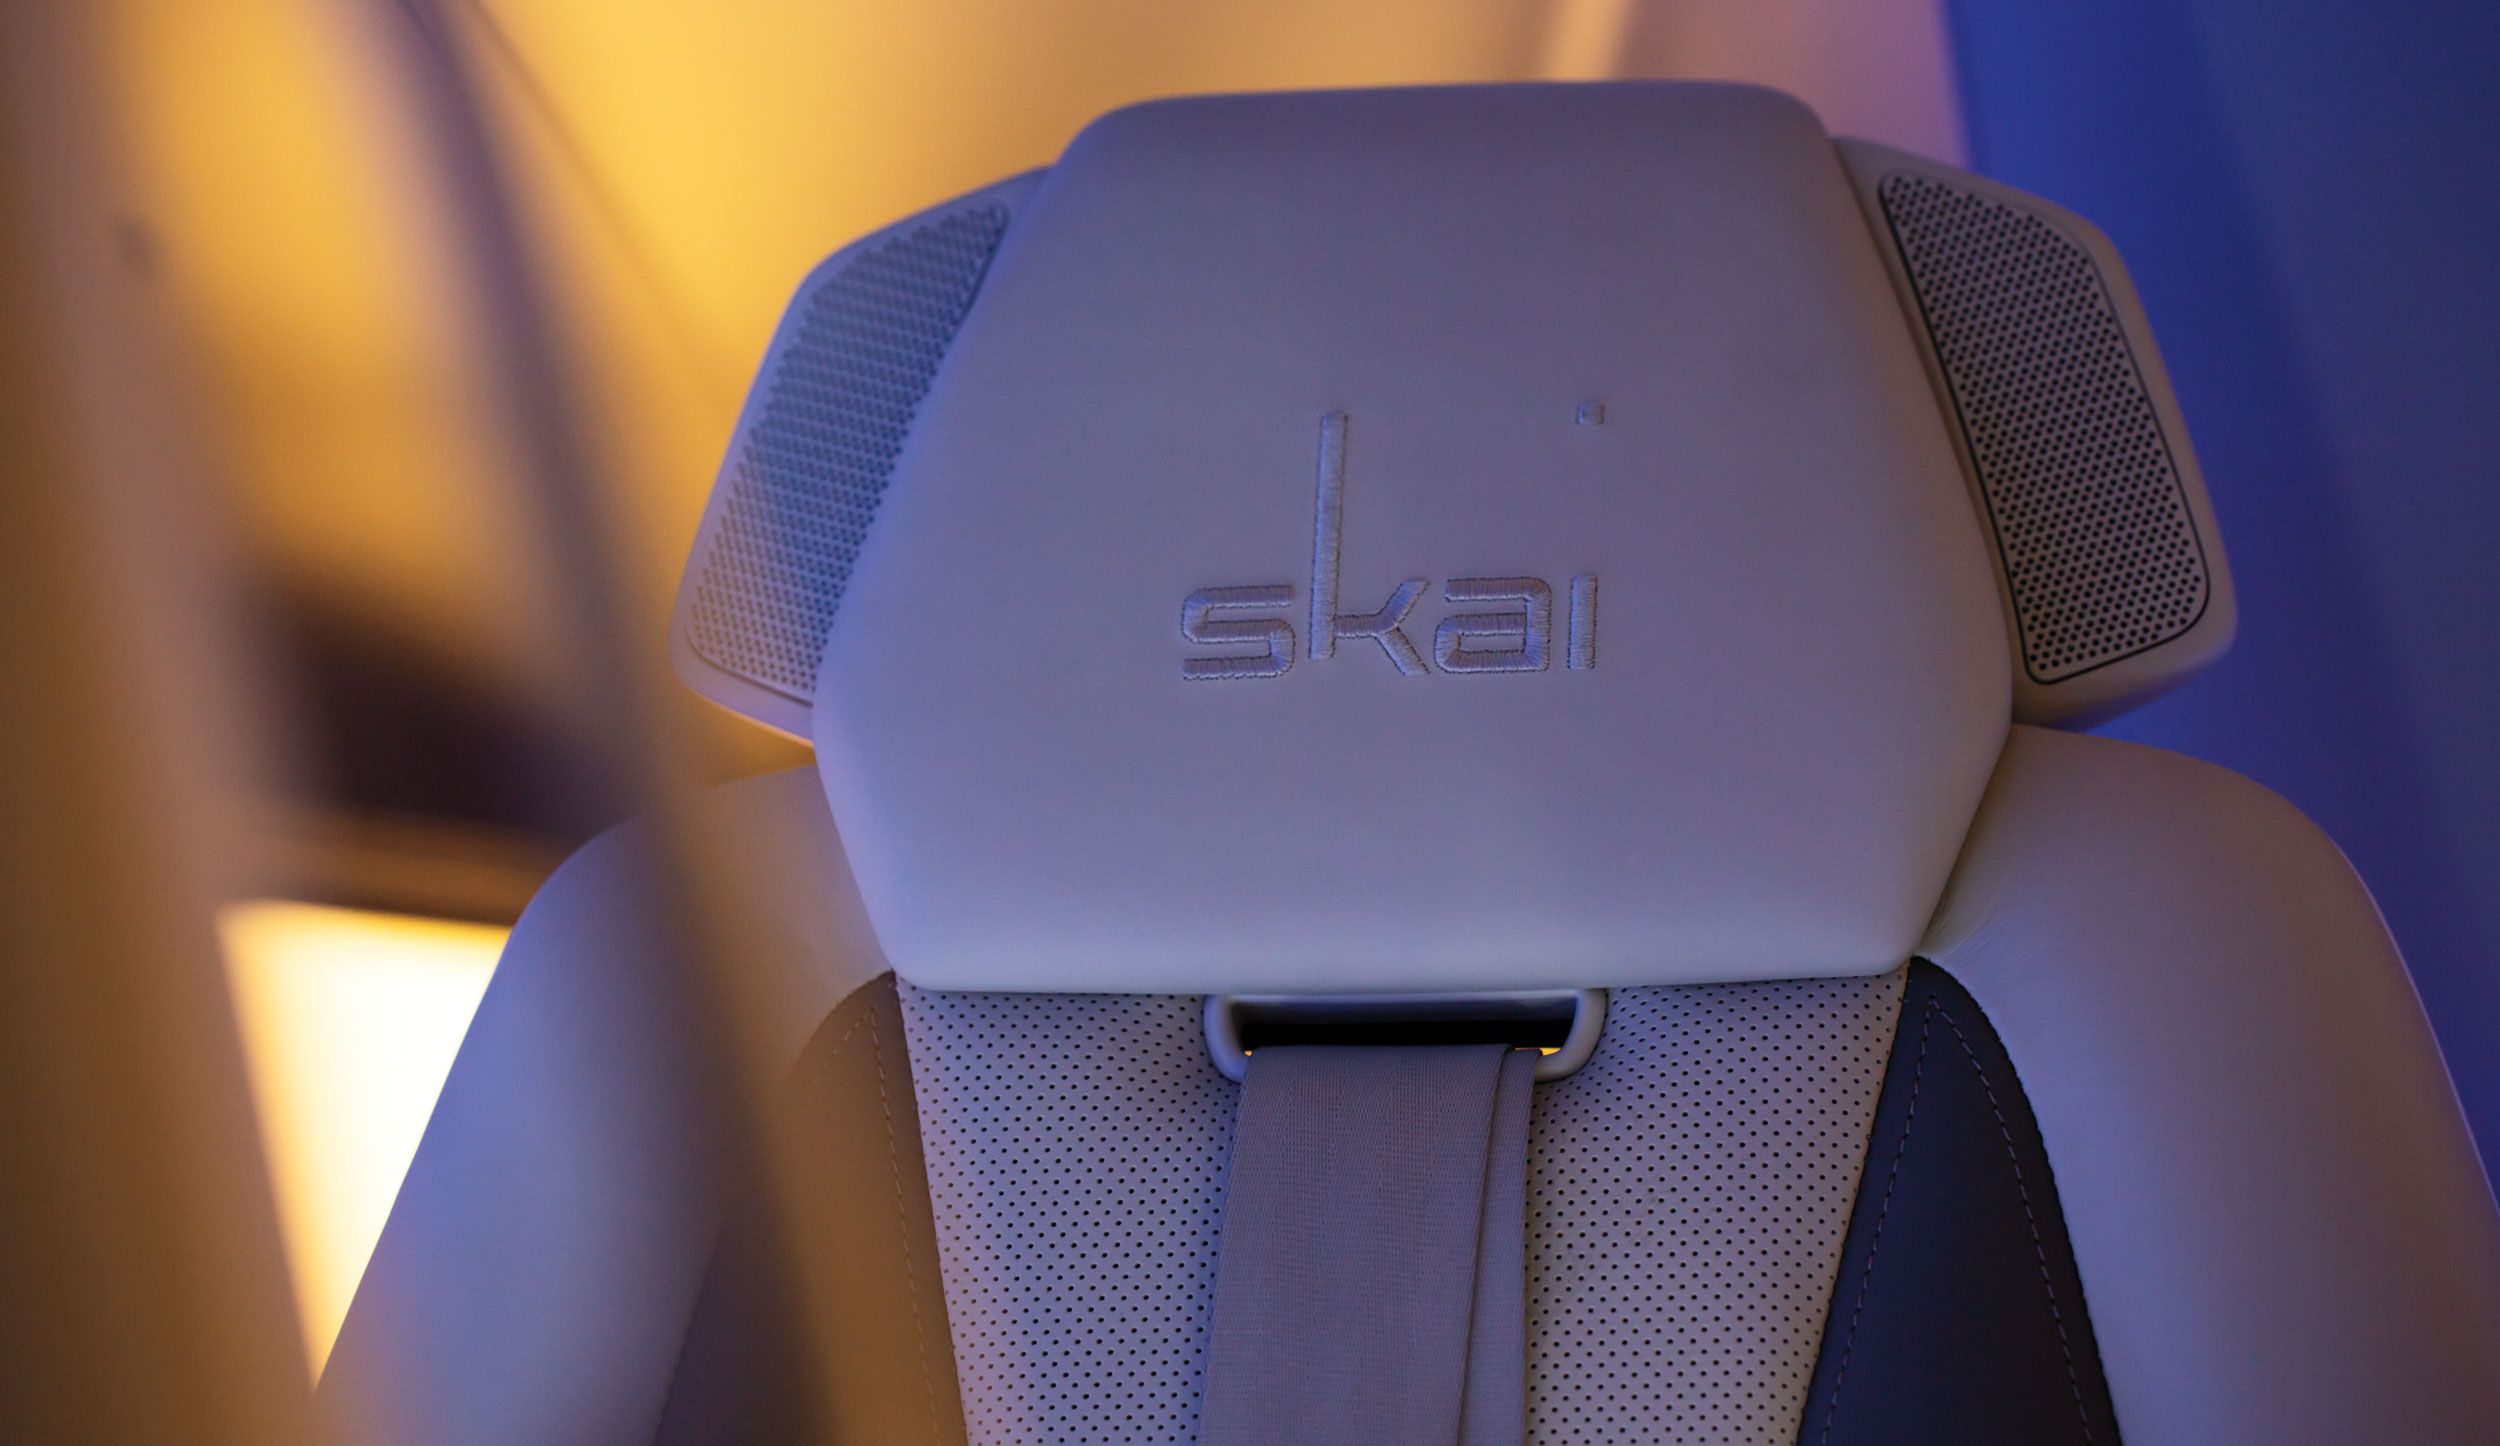 Close up of Skai seating headrest.